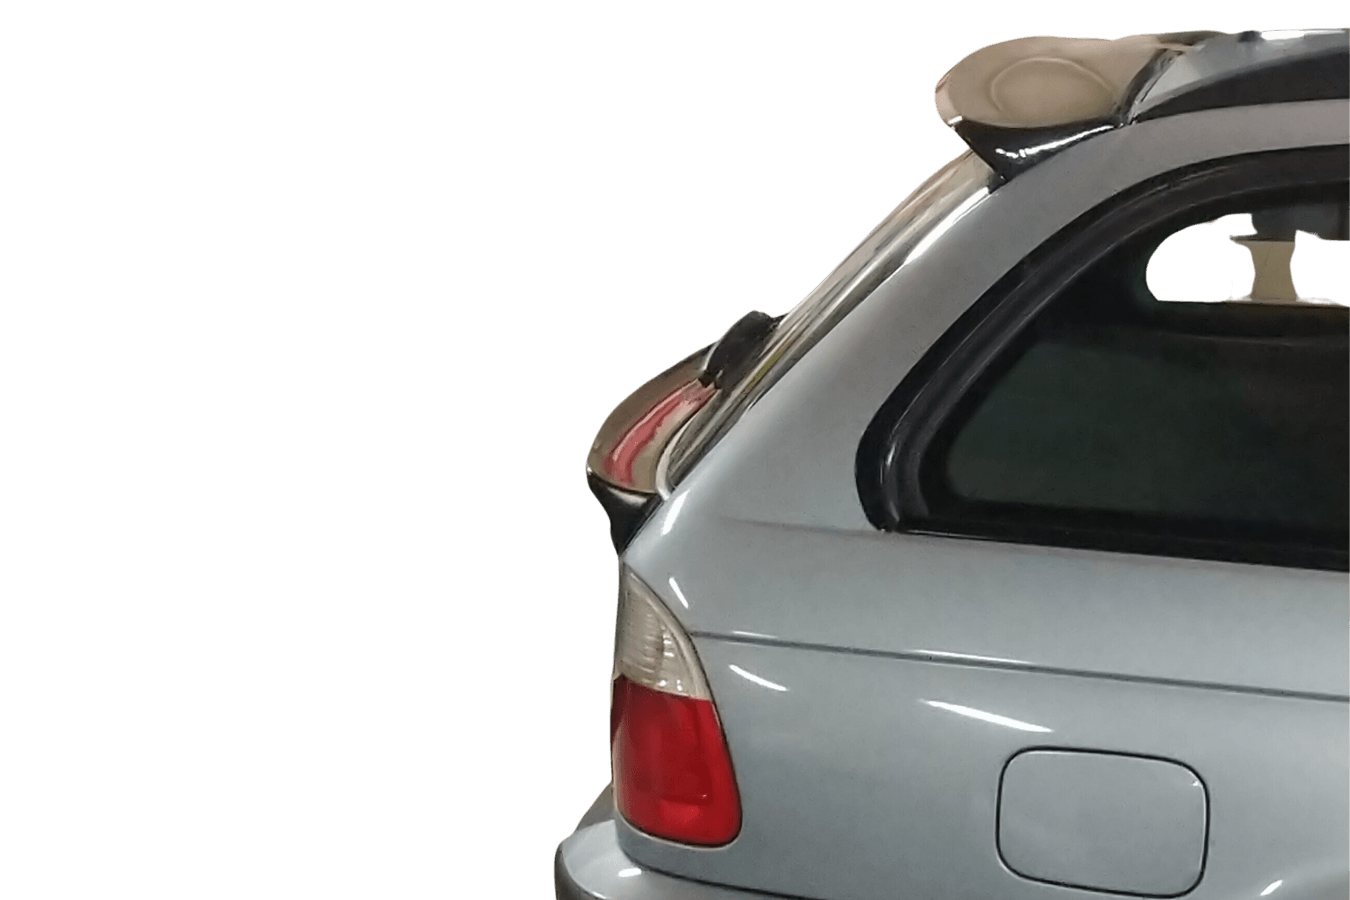 BMW E46 Touring - Roof + Small Spoiler